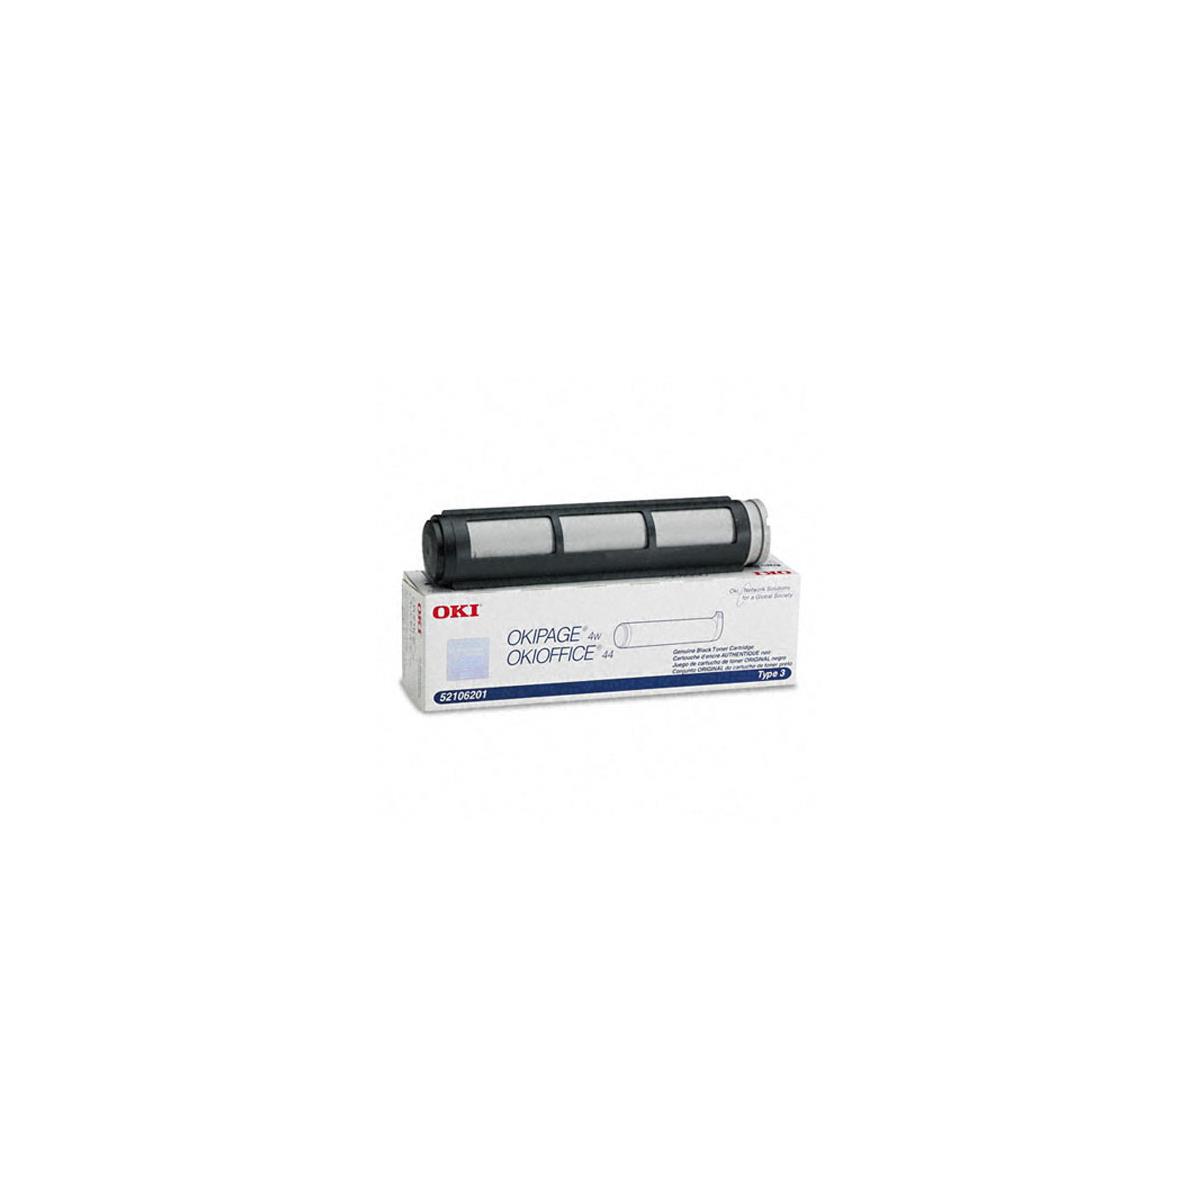 

OKI Data 52106201 Black Toner Cartridge for OKI DataPage 4w